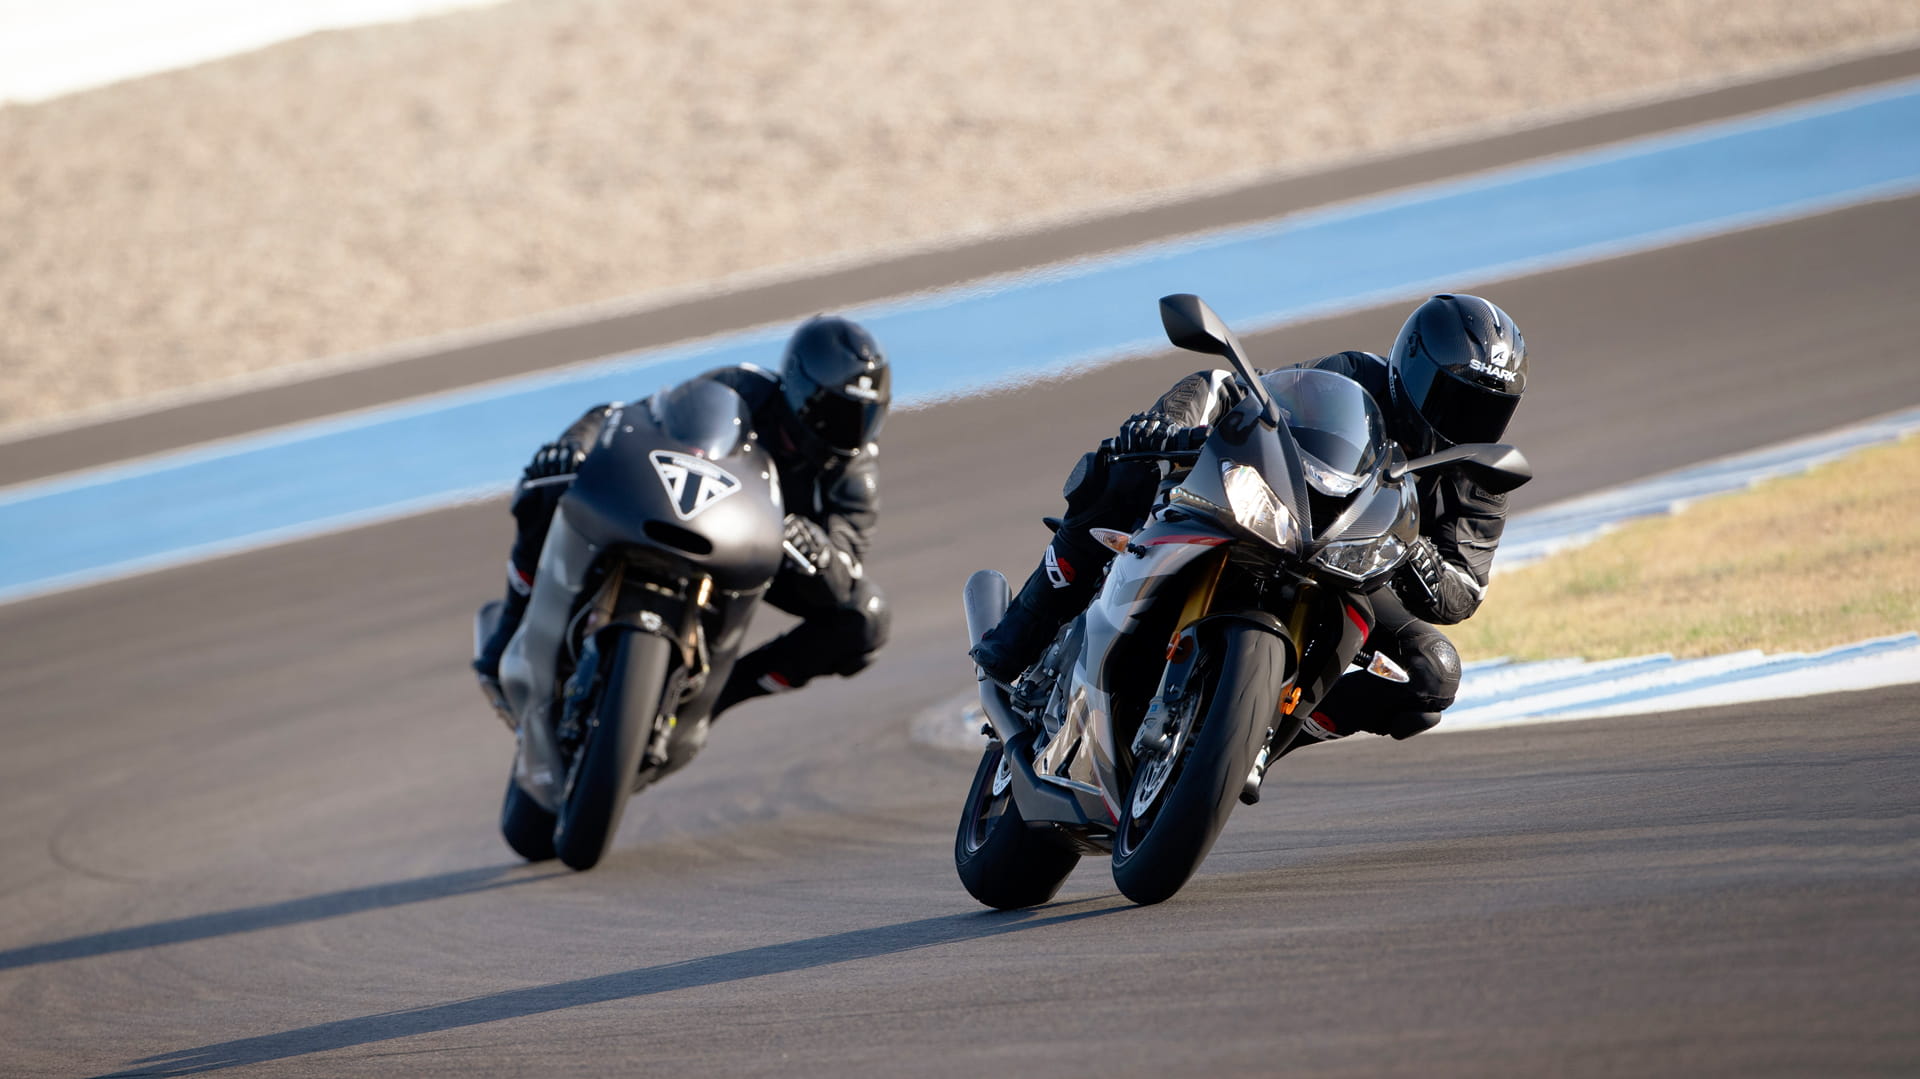 The USA Daytona Moto2™ 765 racing on the track with Triumph's Prototype Moto2™ motorcycle  